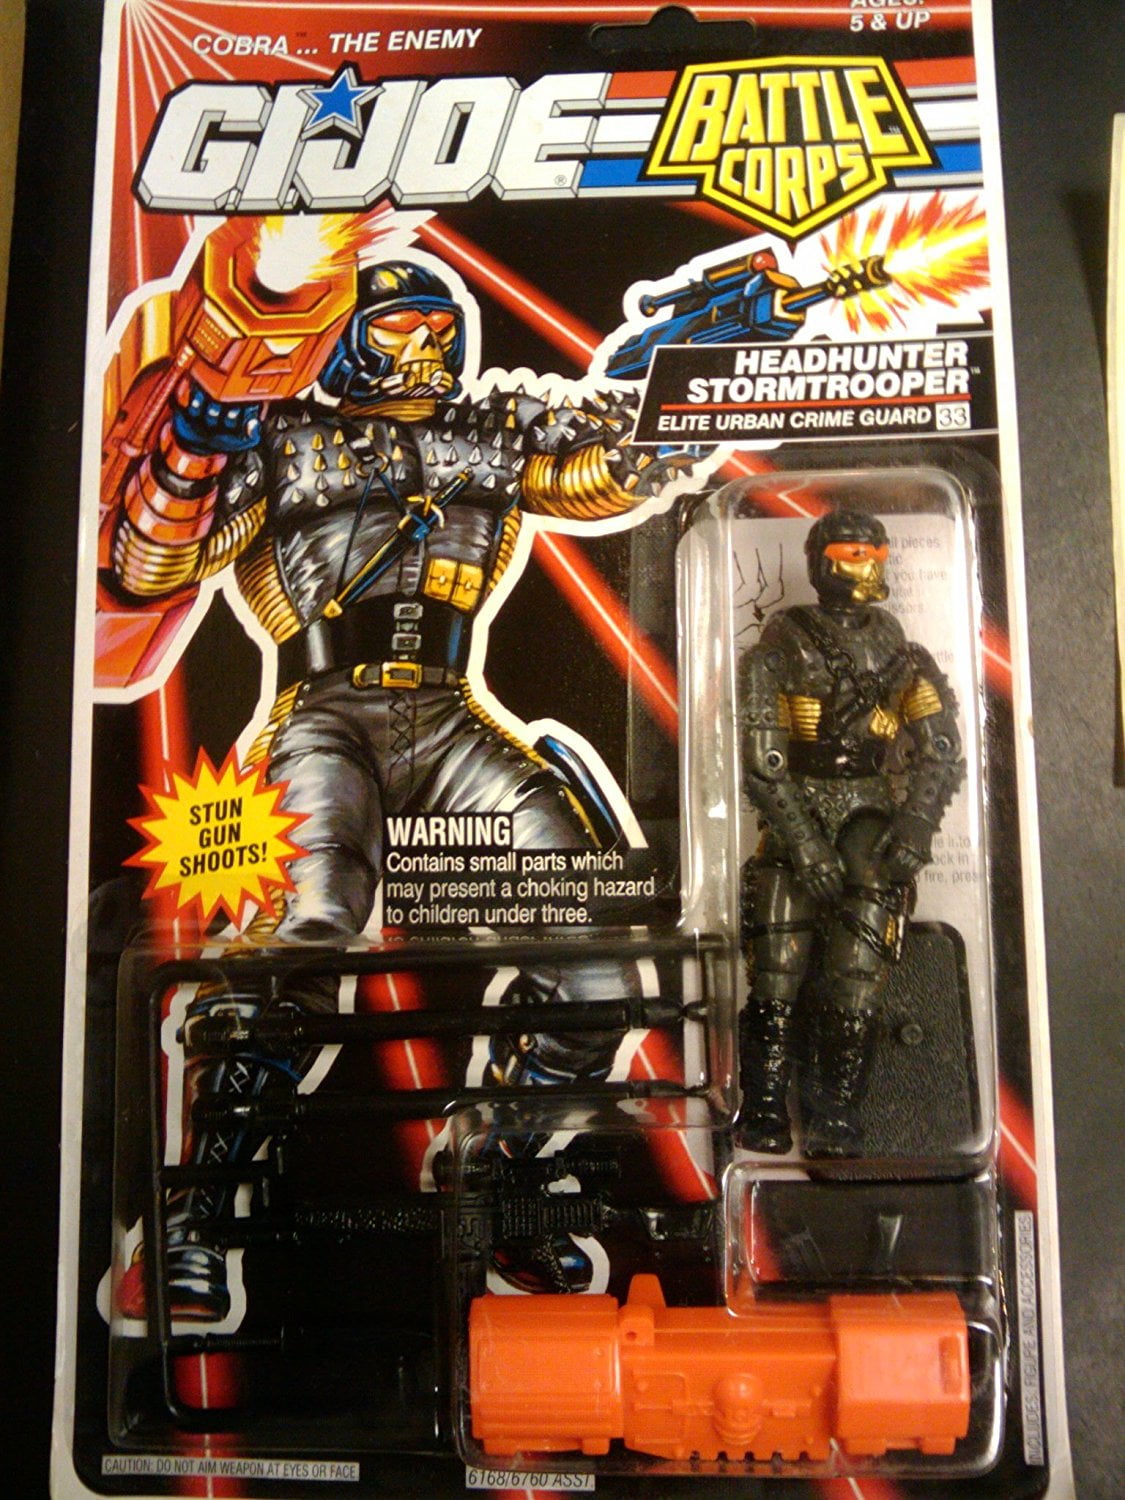 GI Joe Battle Corps: Headhunter Stormtrooper, Stun Gun Shoots By G I